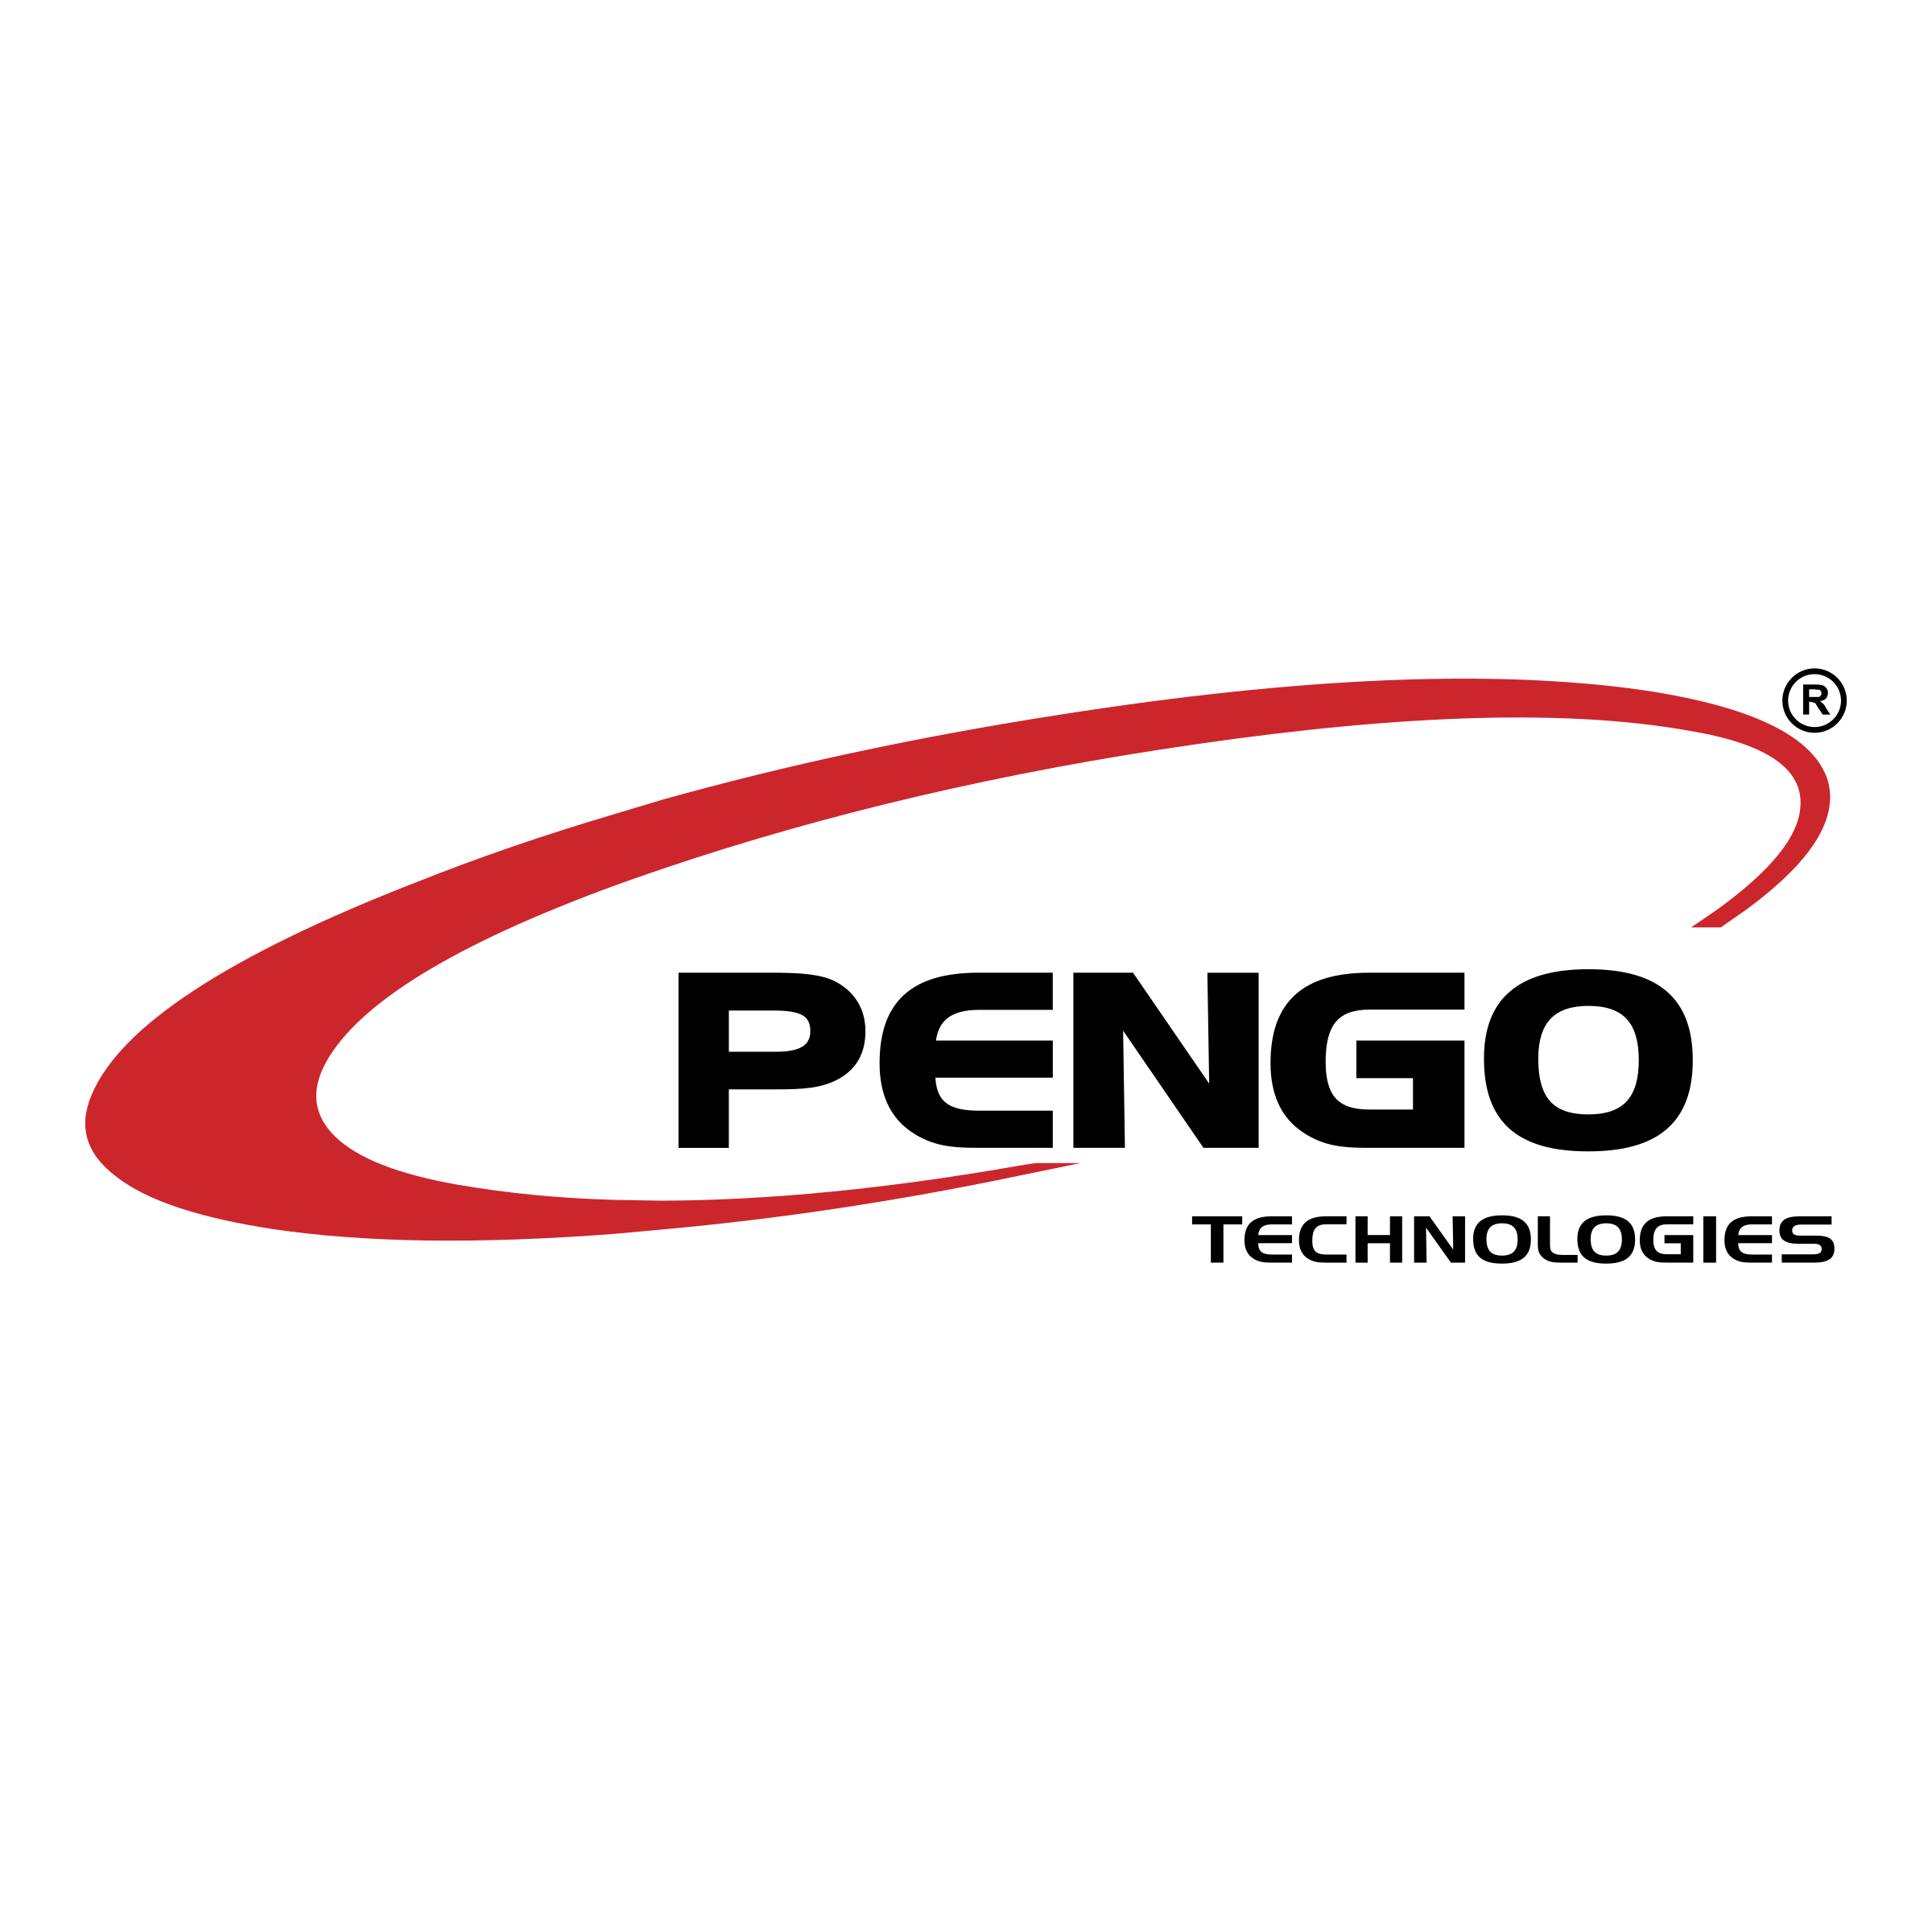 Pengo Logo - Pengo Technologies Logo PNG Transparent & SVG Vector - Freebie Supply